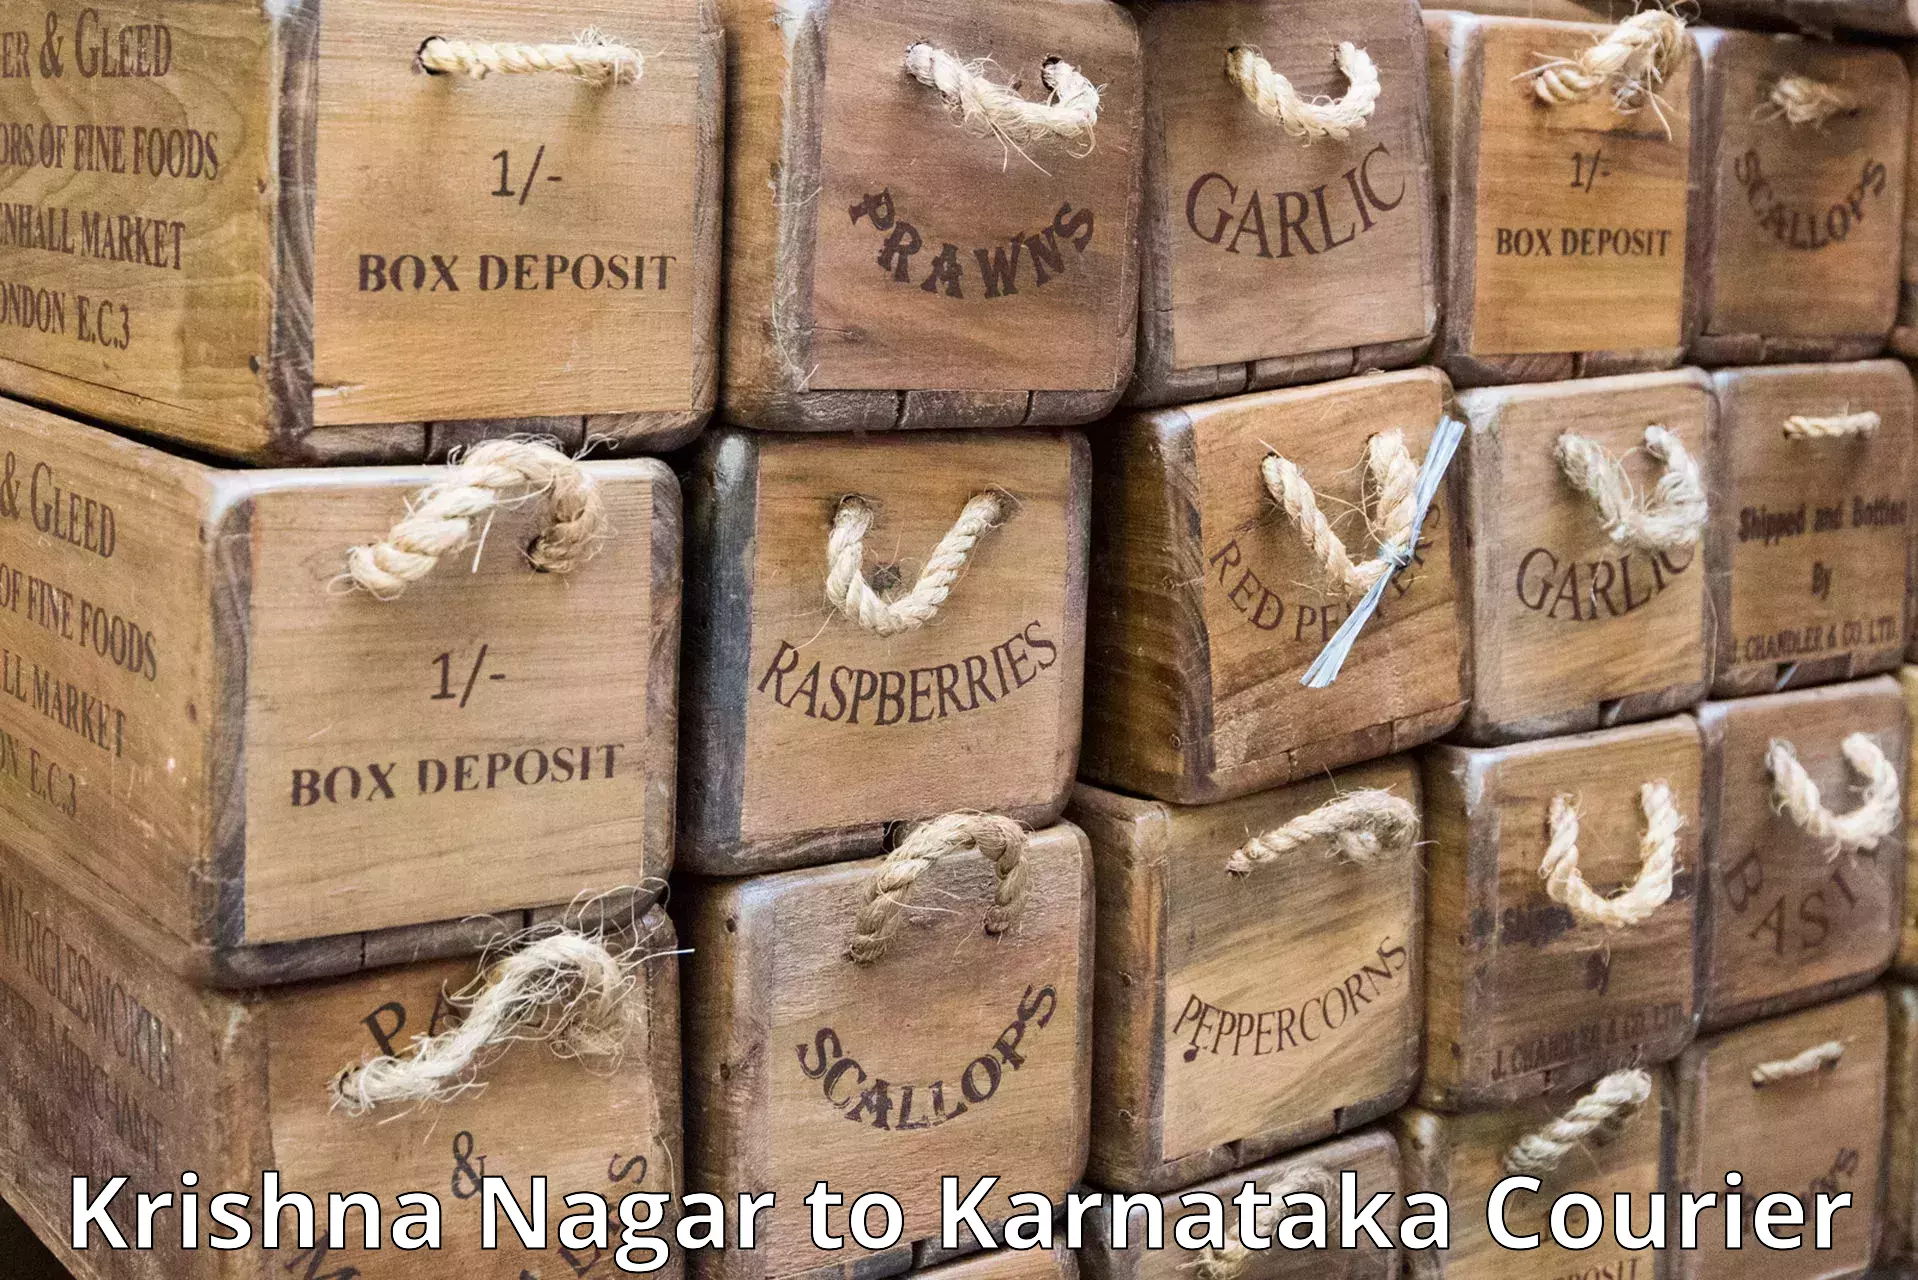 Bulk shipping discounts Krishna Nagar to Bangalore